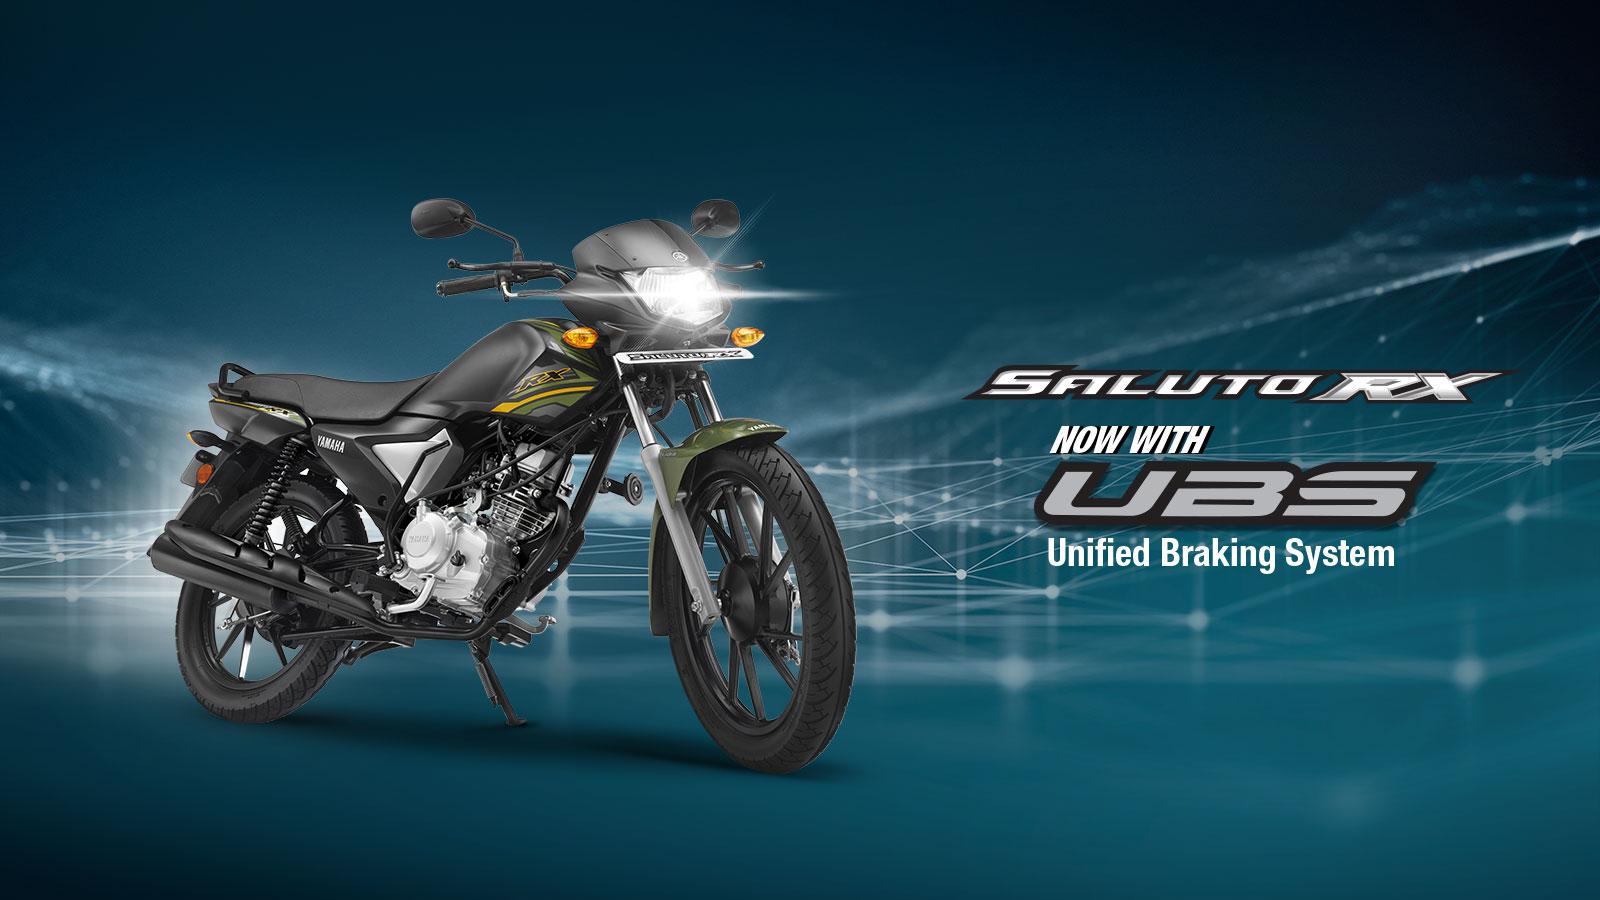 Yamaha Saluto RX Price, Model, Mileage, Specs, Image